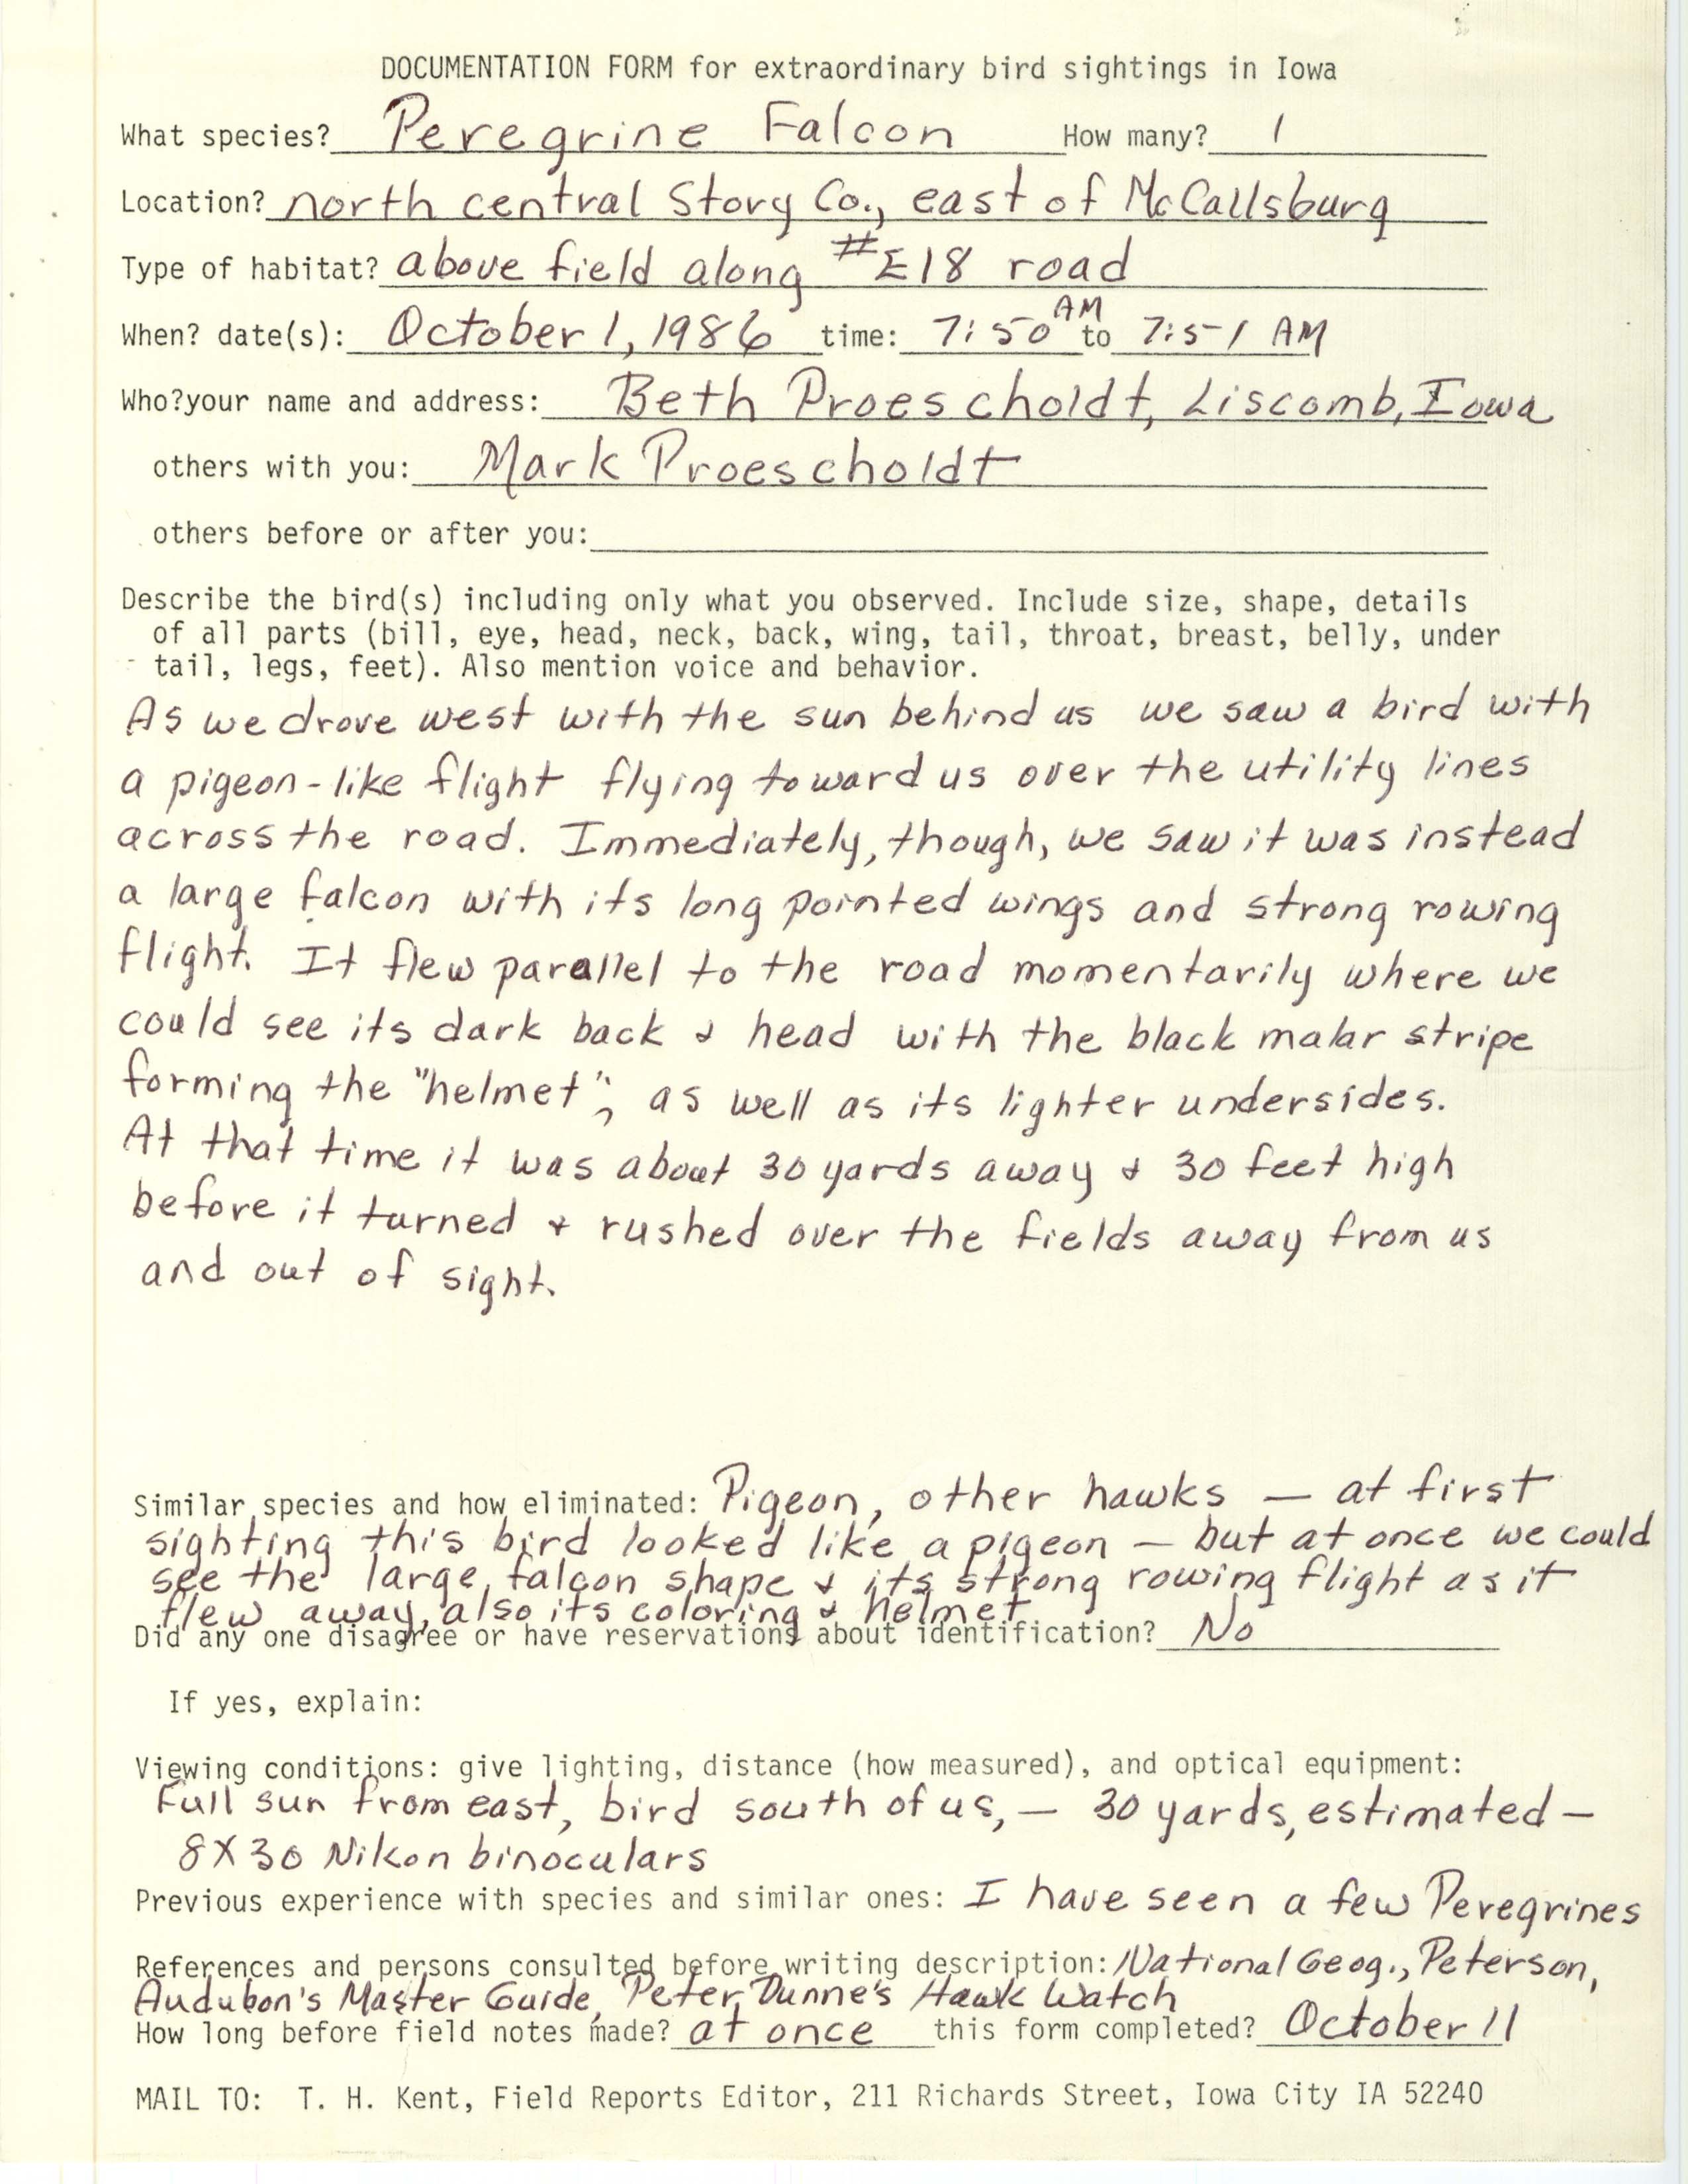 Rare bird documentation form for Peregrine Falcon east of McCallsburg, 1986